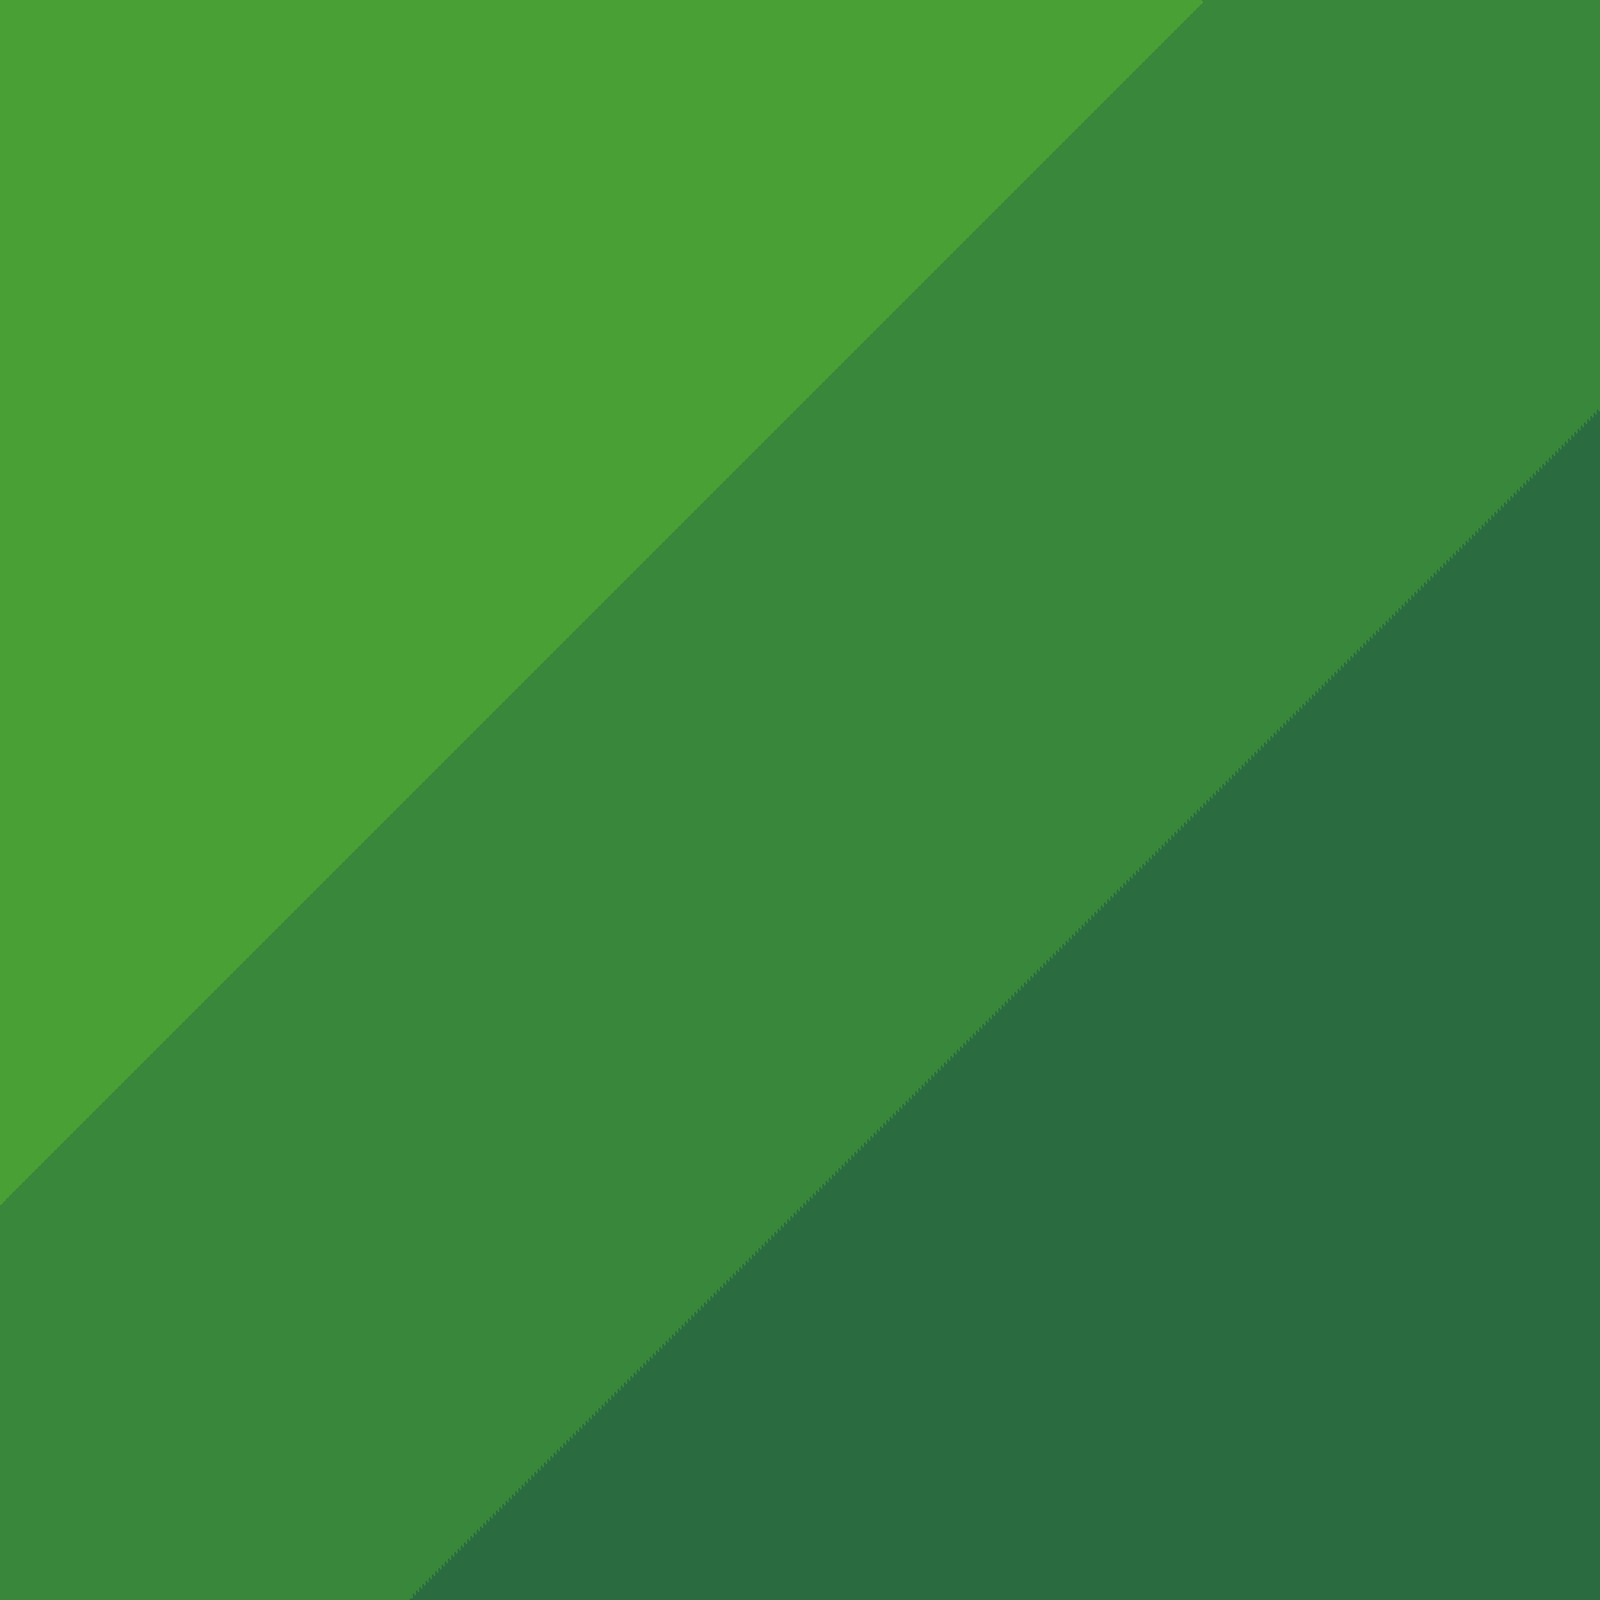 Background Green